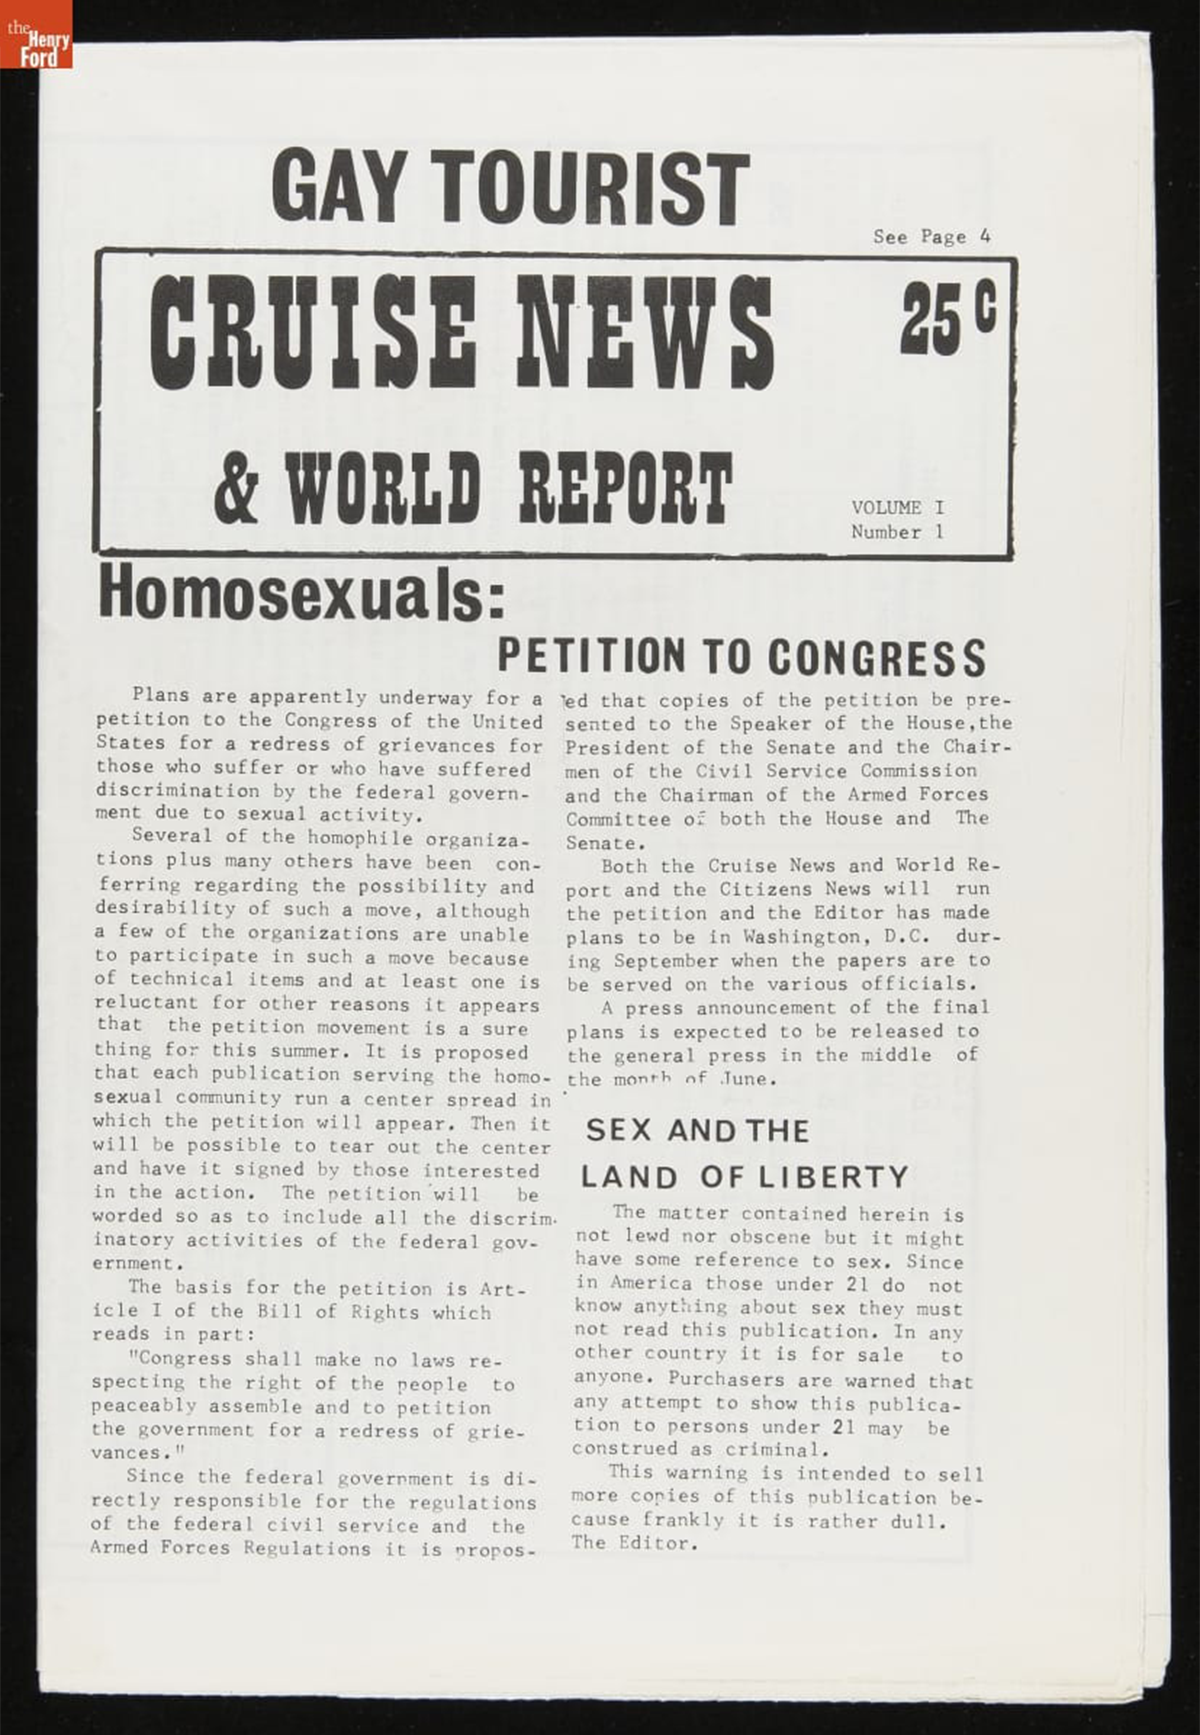 Cruise News & World Report, Volume I, Number 1, circa 1965